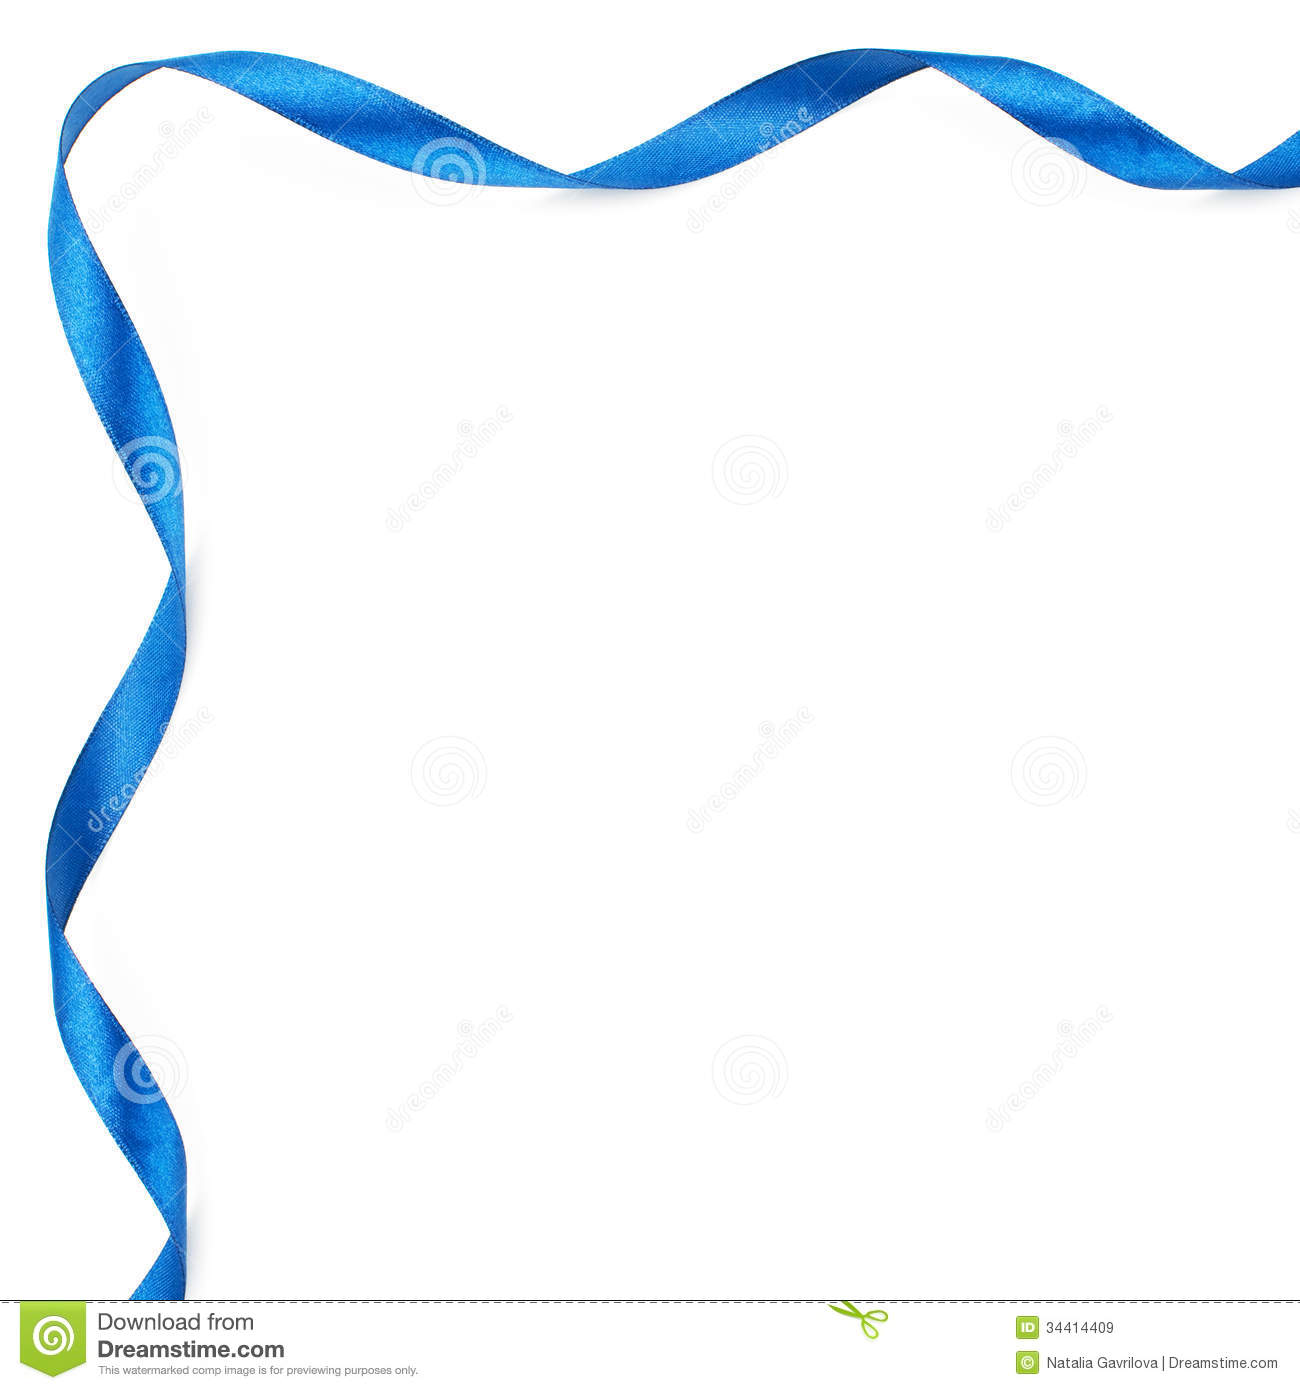 Blue Curled Ribbon Border Isolated On White Background Square Image